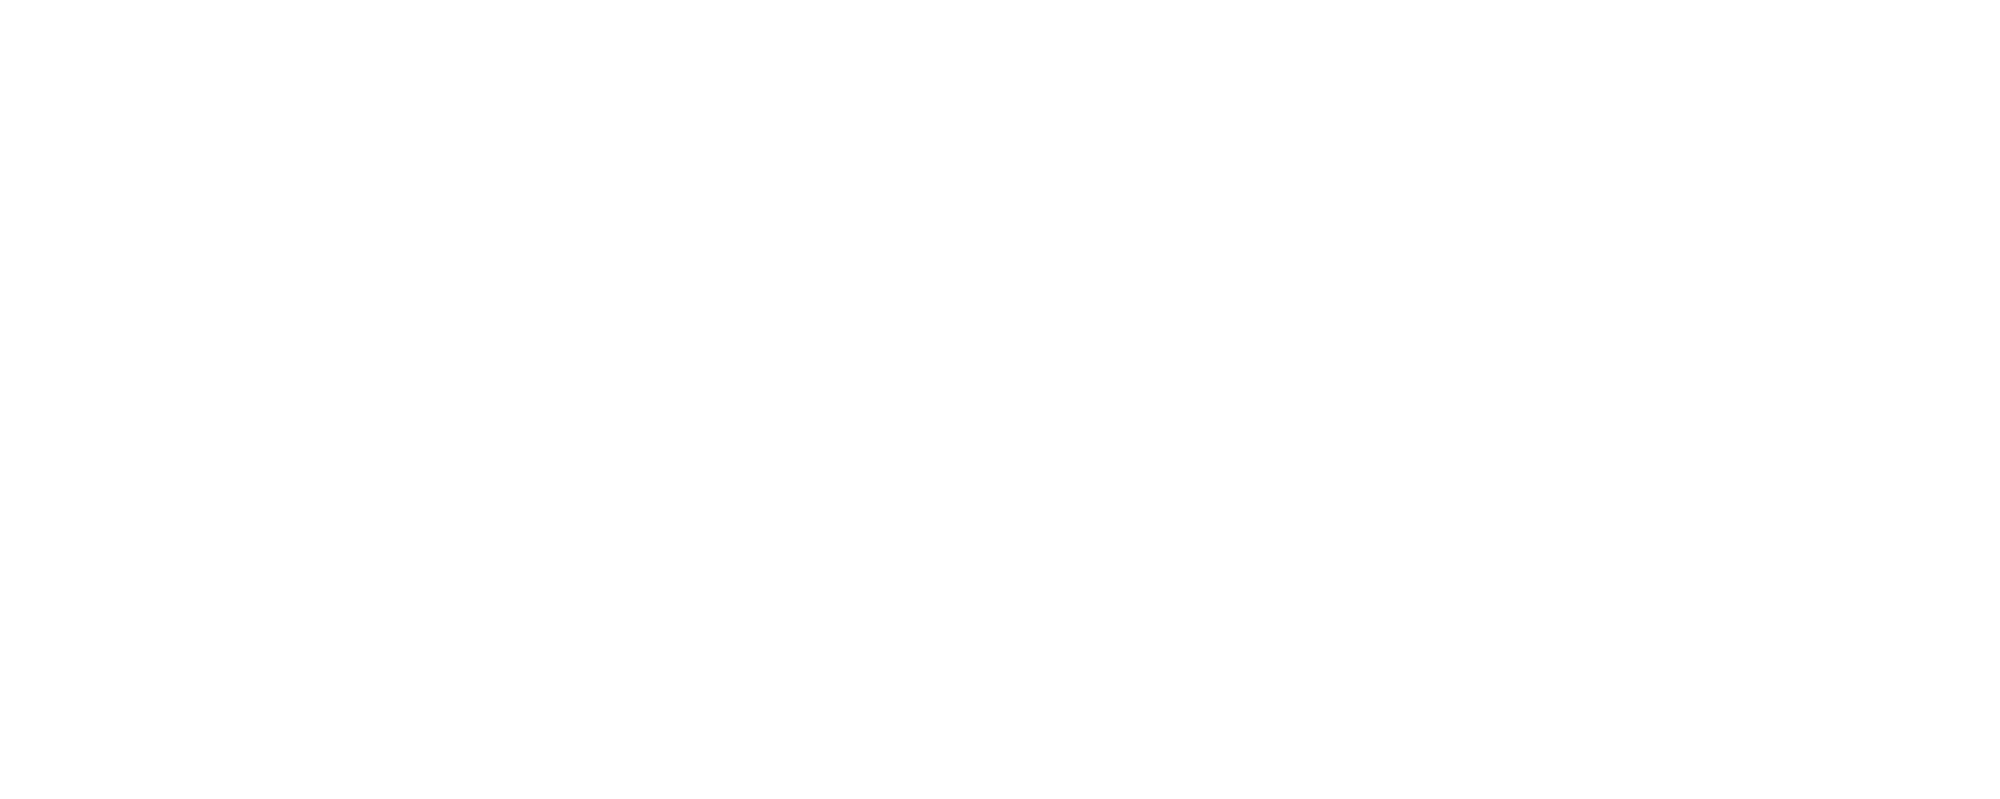 Funterra_Logo_Guides_Horizontal_KO_White_SMART_Appendage